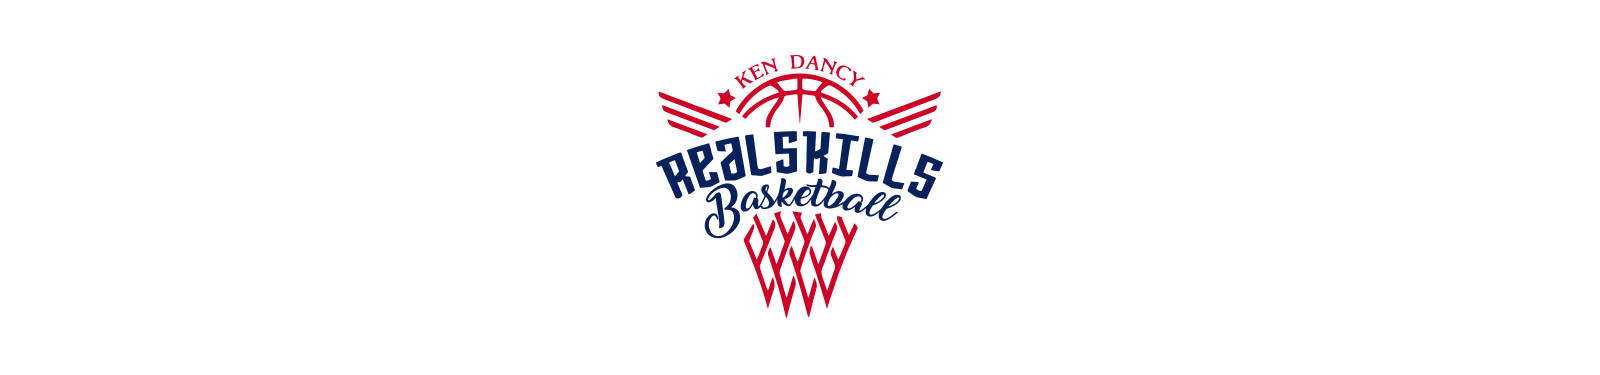 Realskills BasketBall Camp